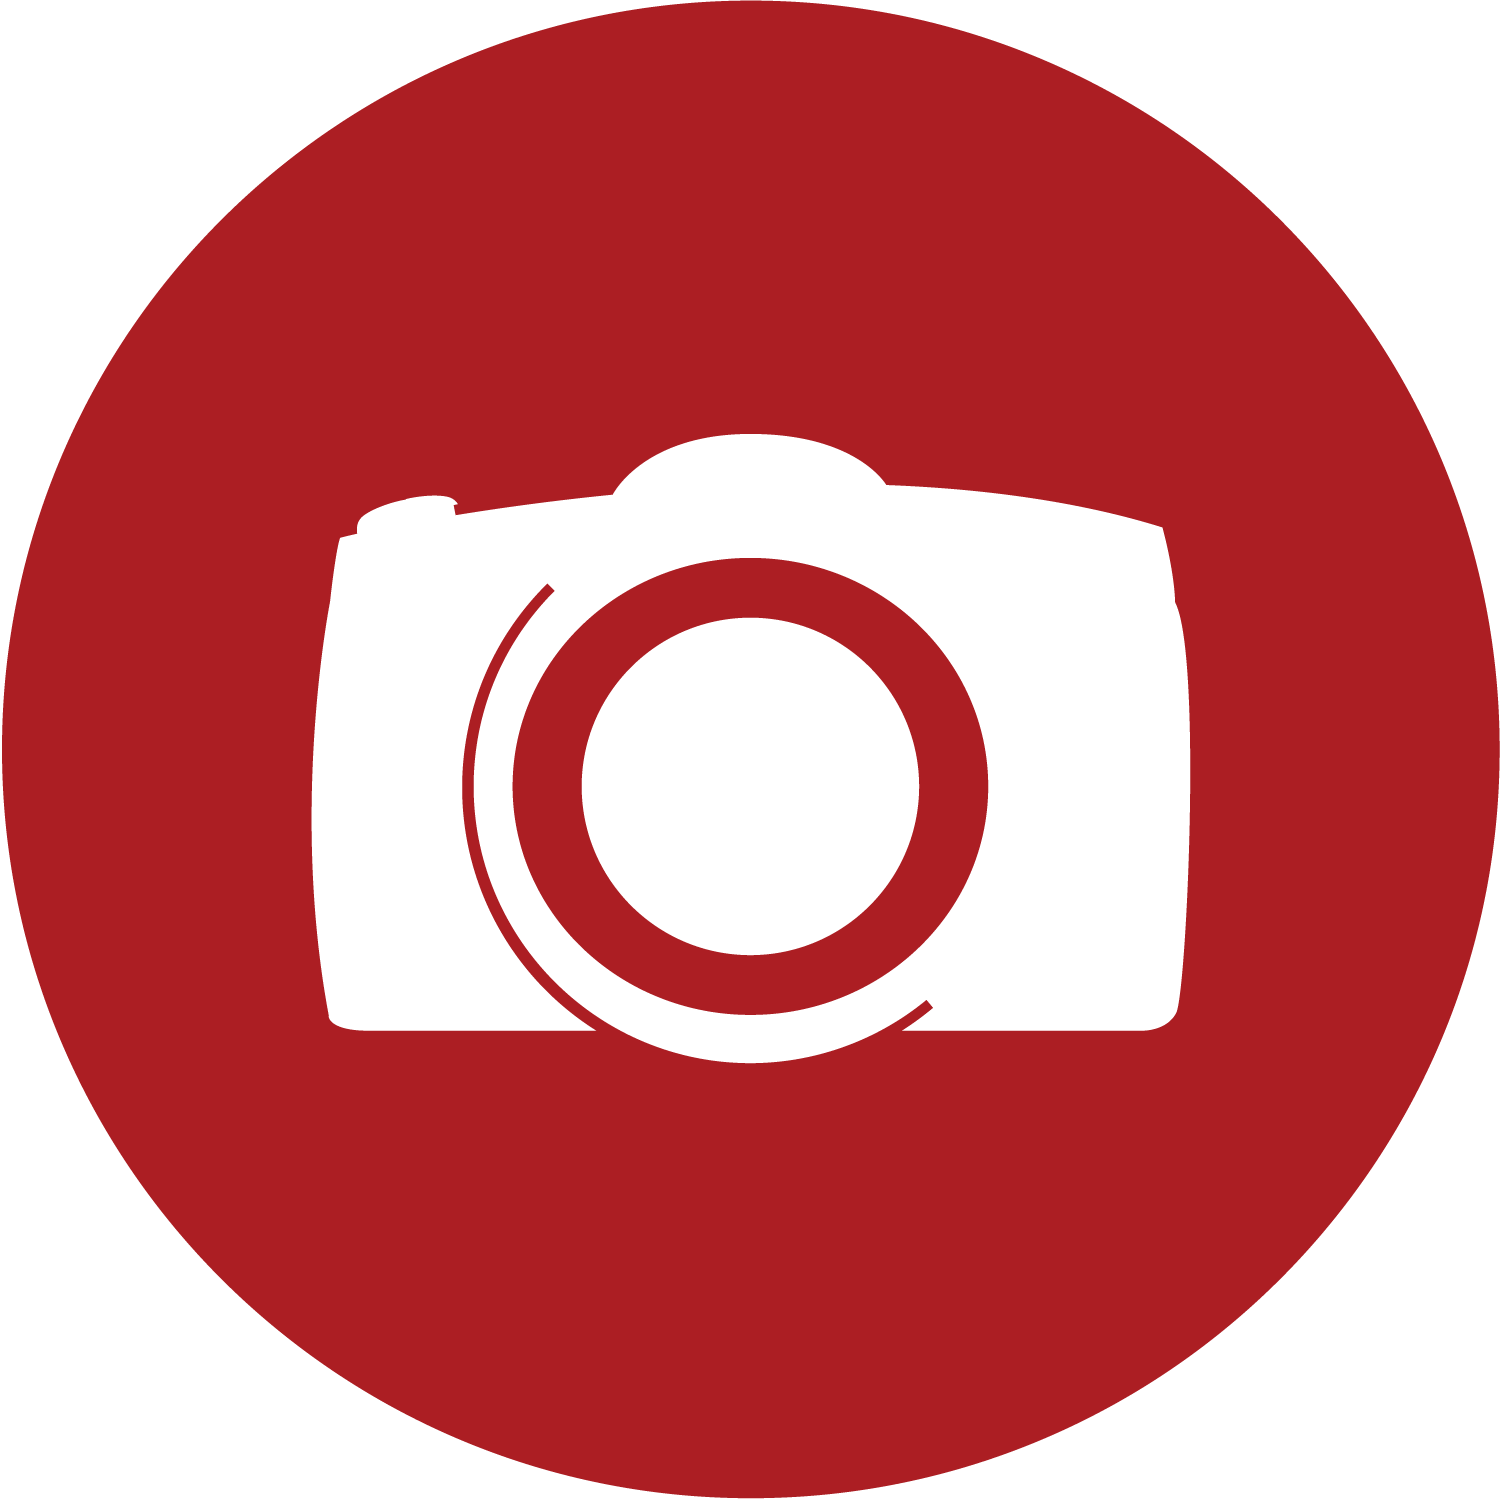 Free Logo Kamera, Download Free Clip Art, Free Clip Art on ...
